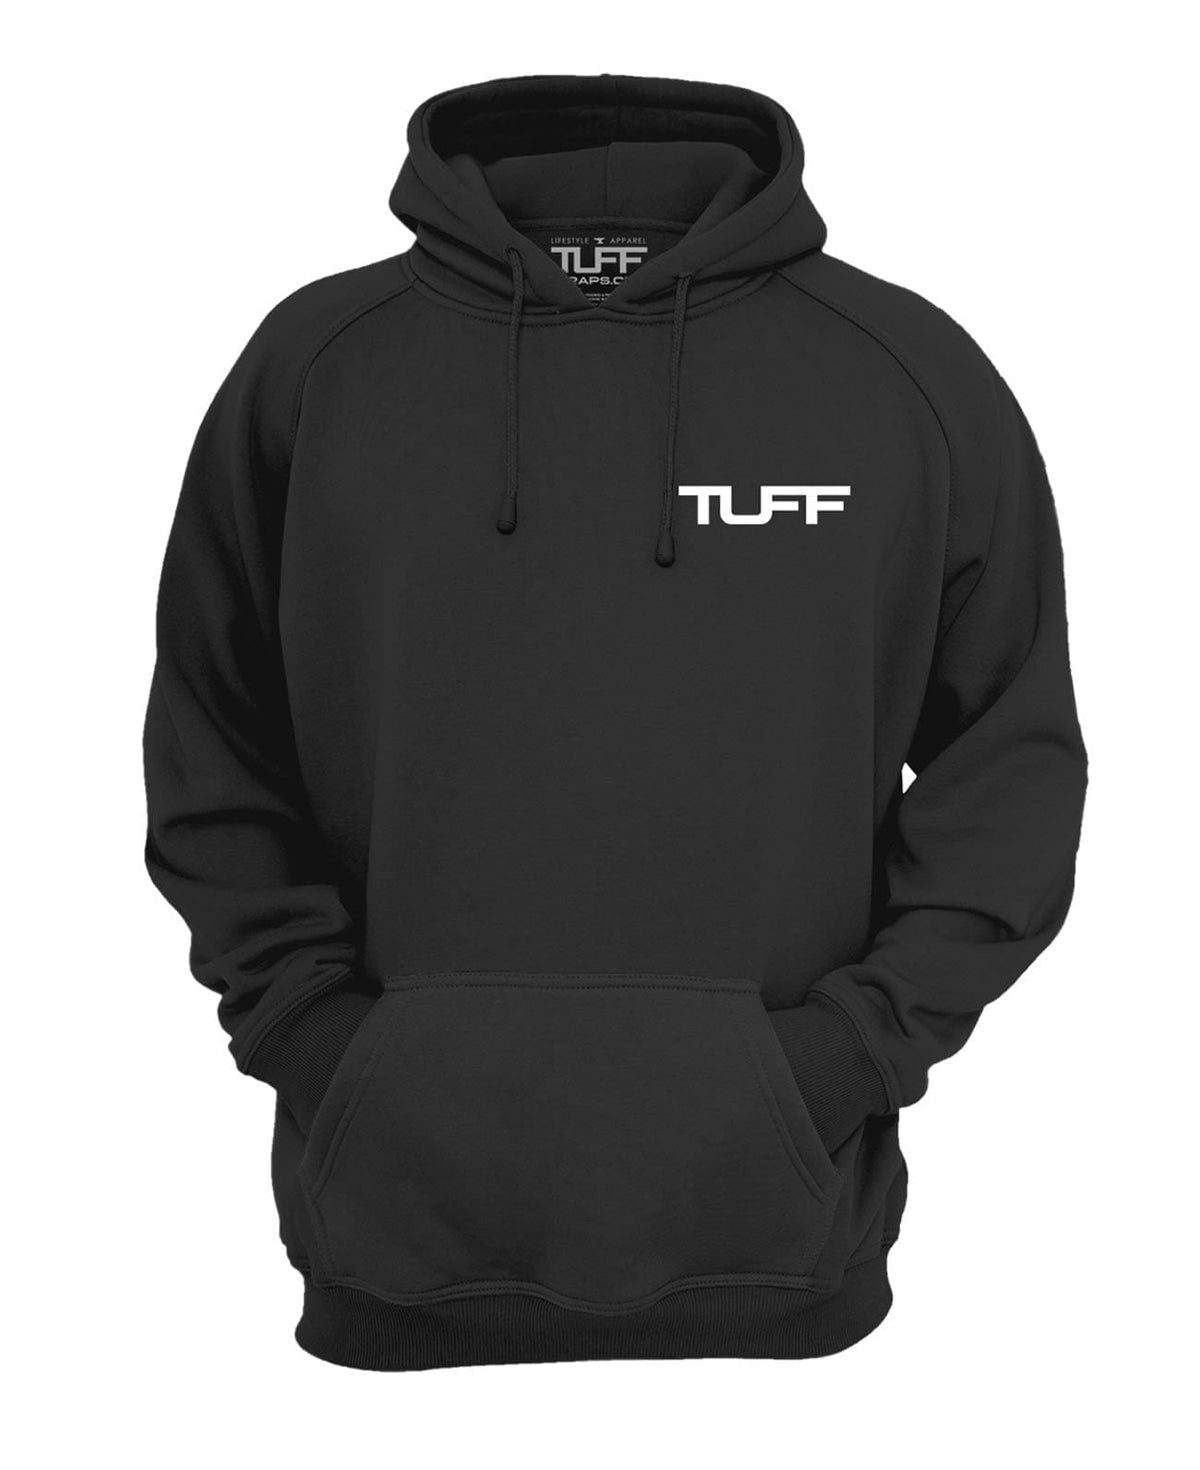 Alpha Ambitions Untamed Hooded Sweatshirt TuffWraps.com